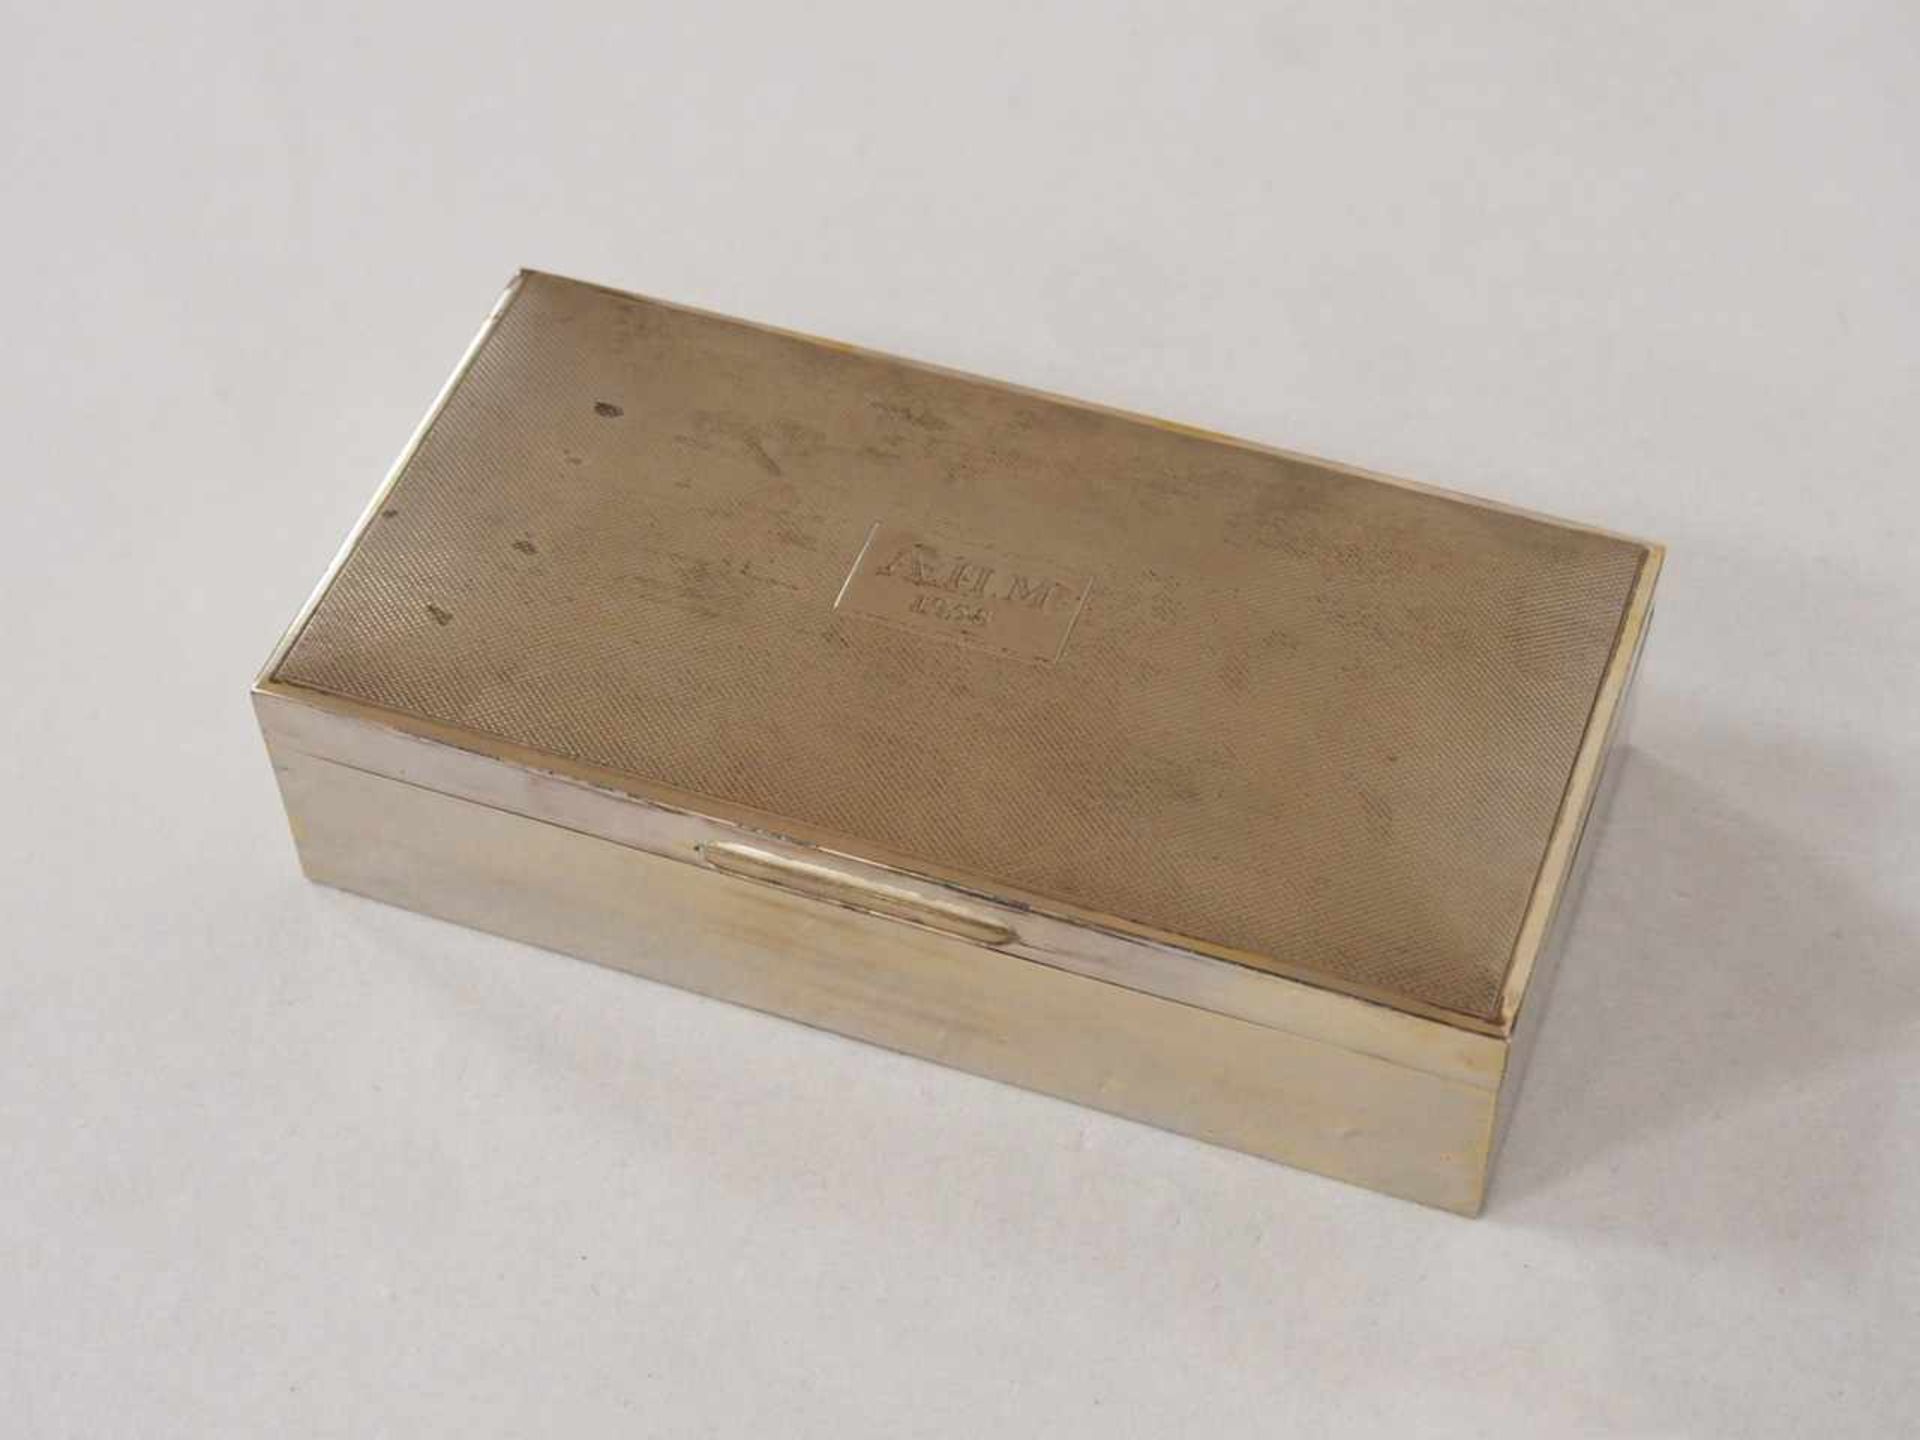 ZigarrenkisteSilber, Zedernholzeinsatz, Birmingham 1957, 4,5 x 17,5 x 9 cm- - -25.00 % buyer's